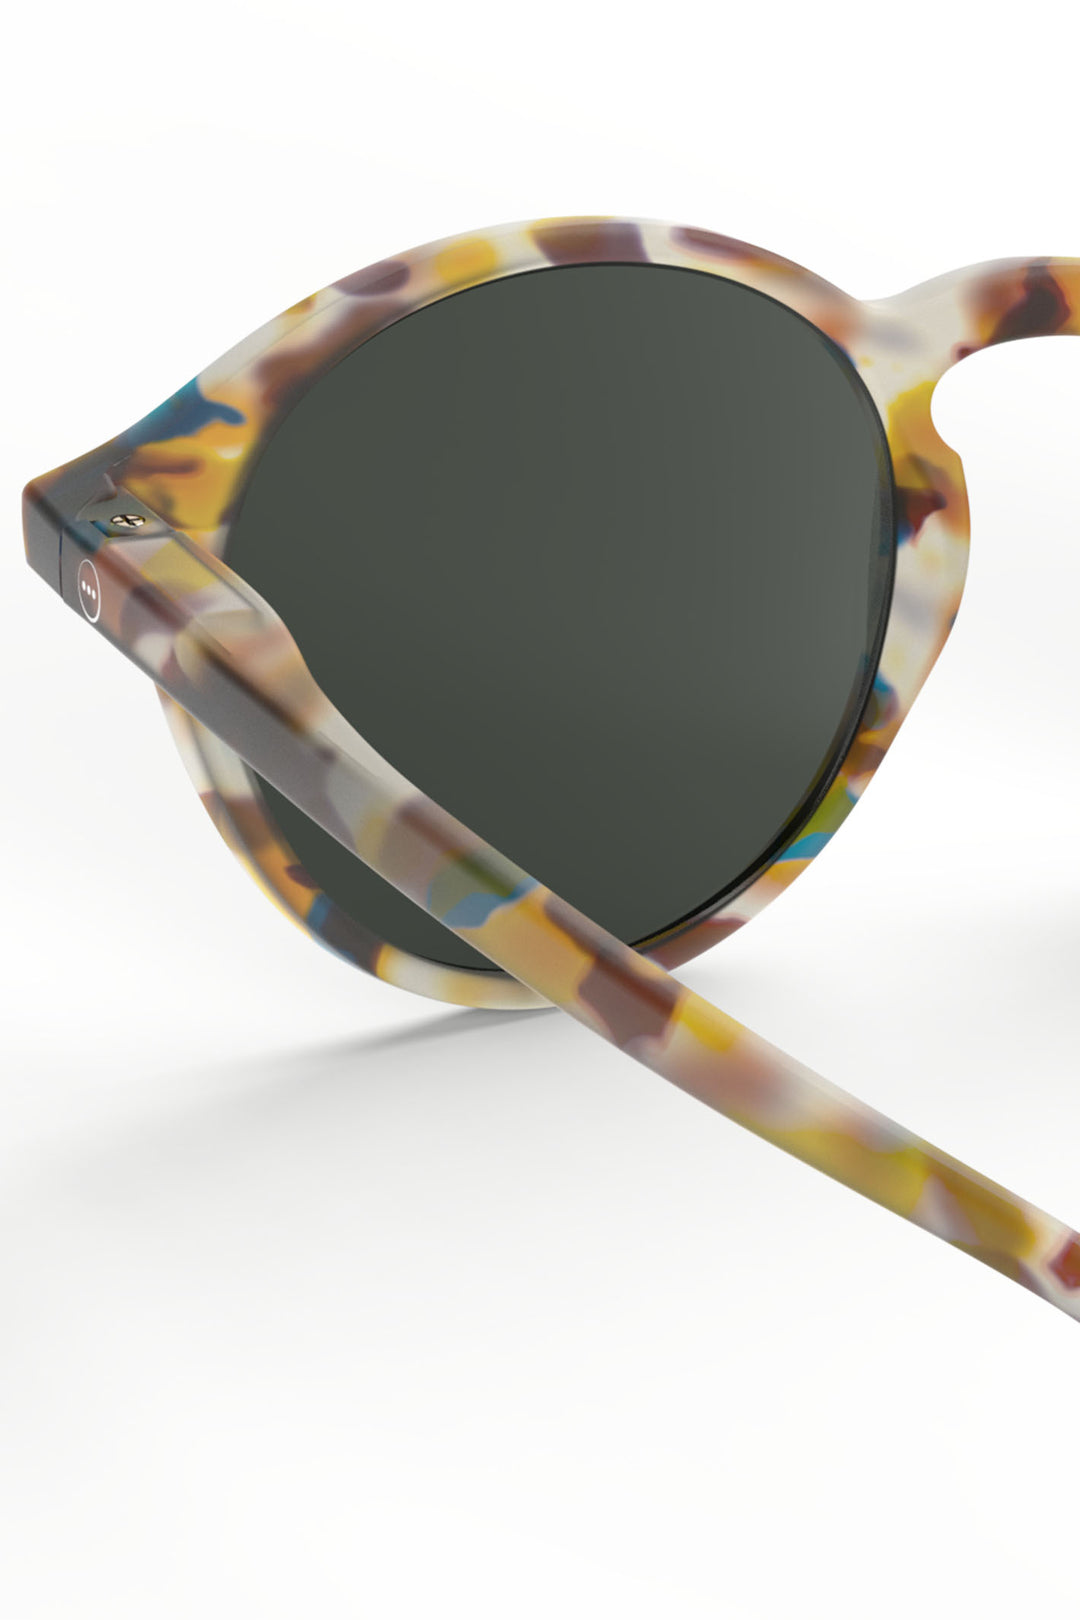 Izipizi Paris SLMSDC18 Blue Tortoise Pattern Sunglasses - Olivia Grace Fashion